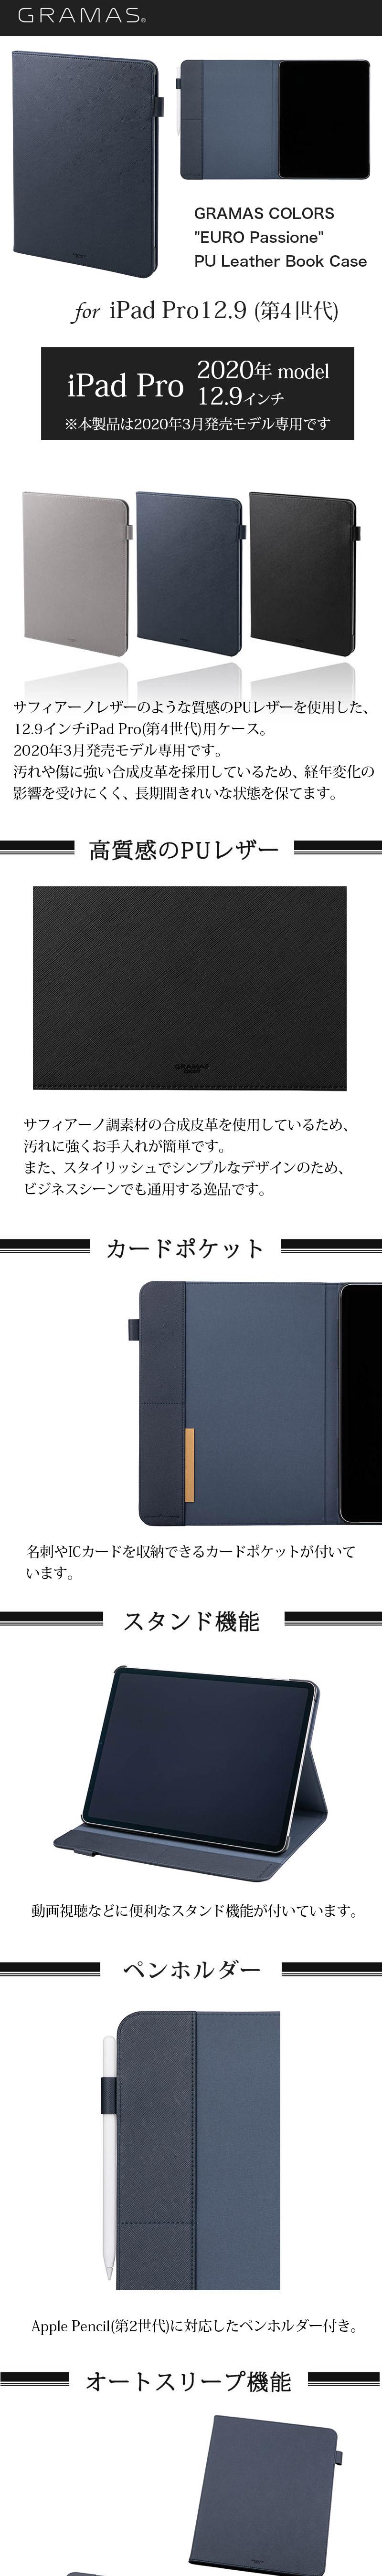 GRAMAS COLORS EURO Passione PU Leather Book Case』iPad Pro 12.9インチ 第4世代  2020年 モデル iPad Pro 12.9 ケース・フィルム